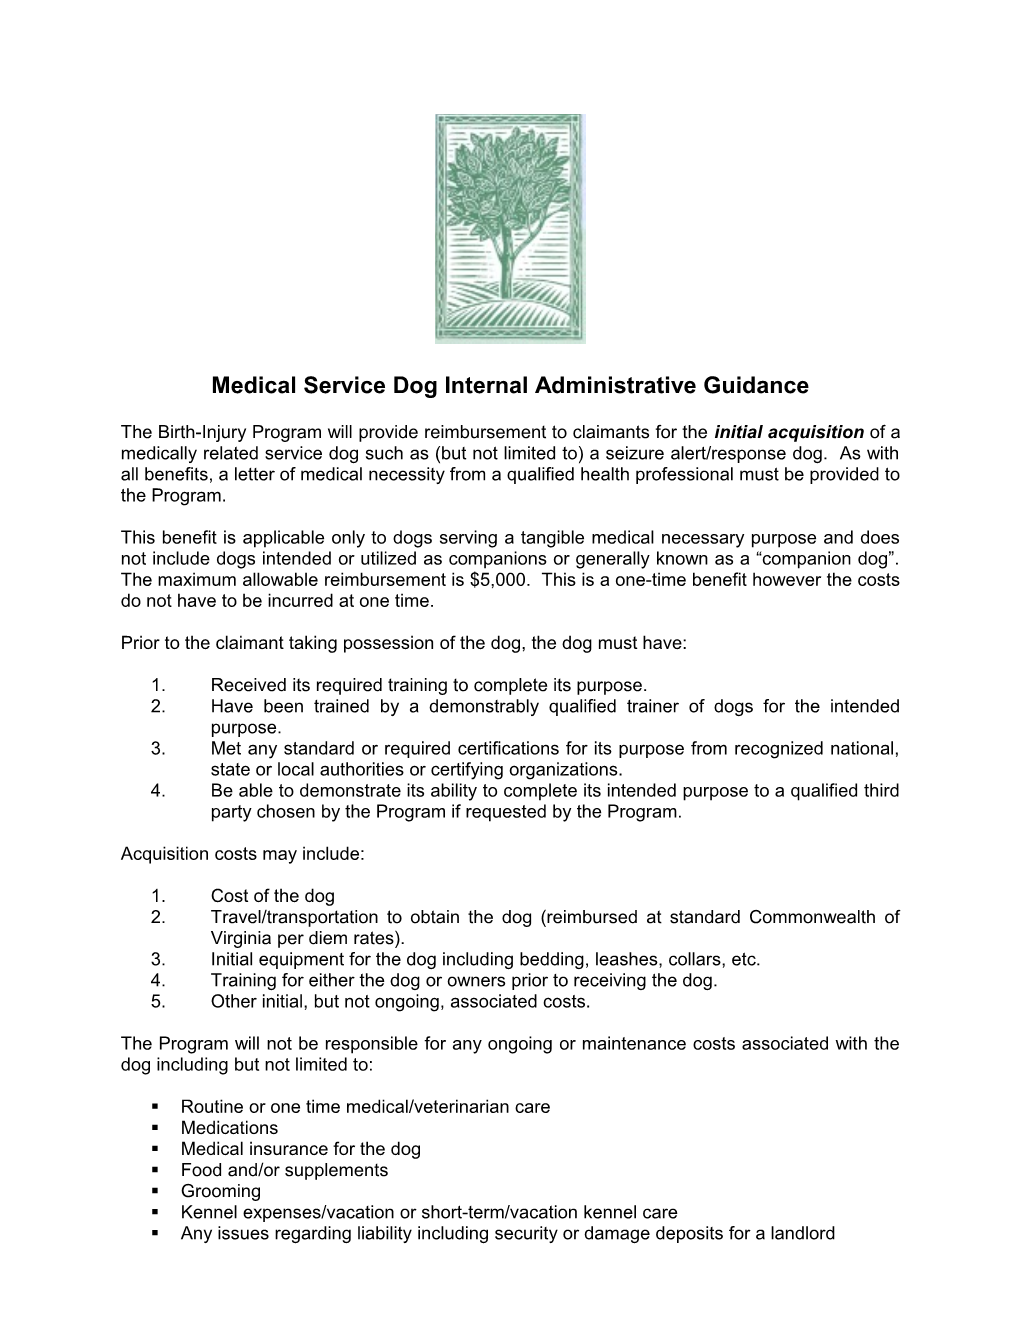 Medical Service Dog Policy Draft